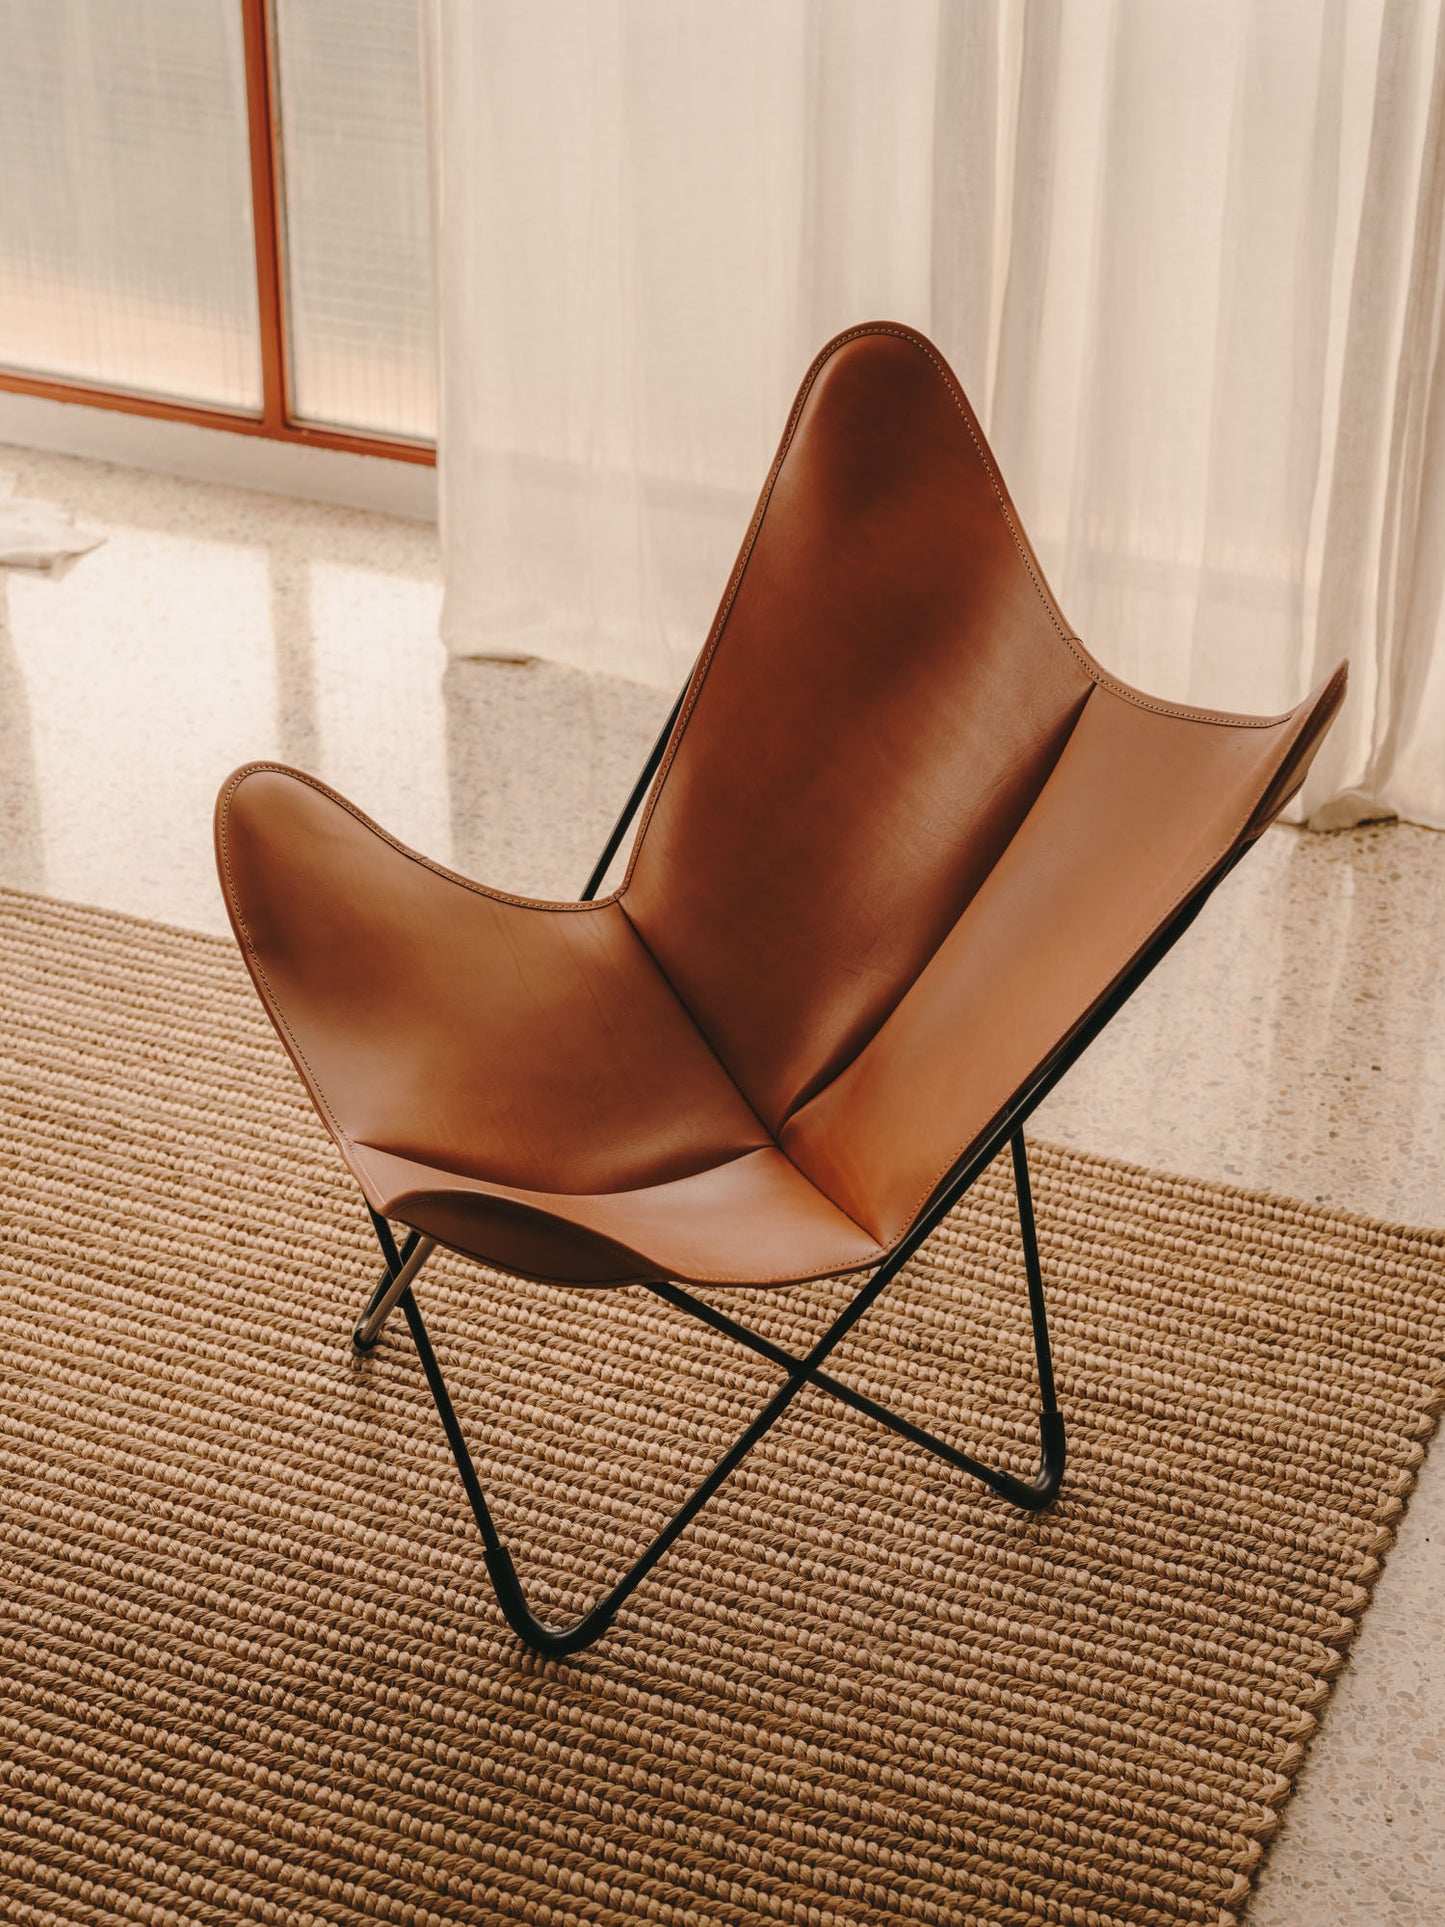 BONET BKF CHAIR - Butterfly Leather Chair by Bonet, Ferrari & Kurchan